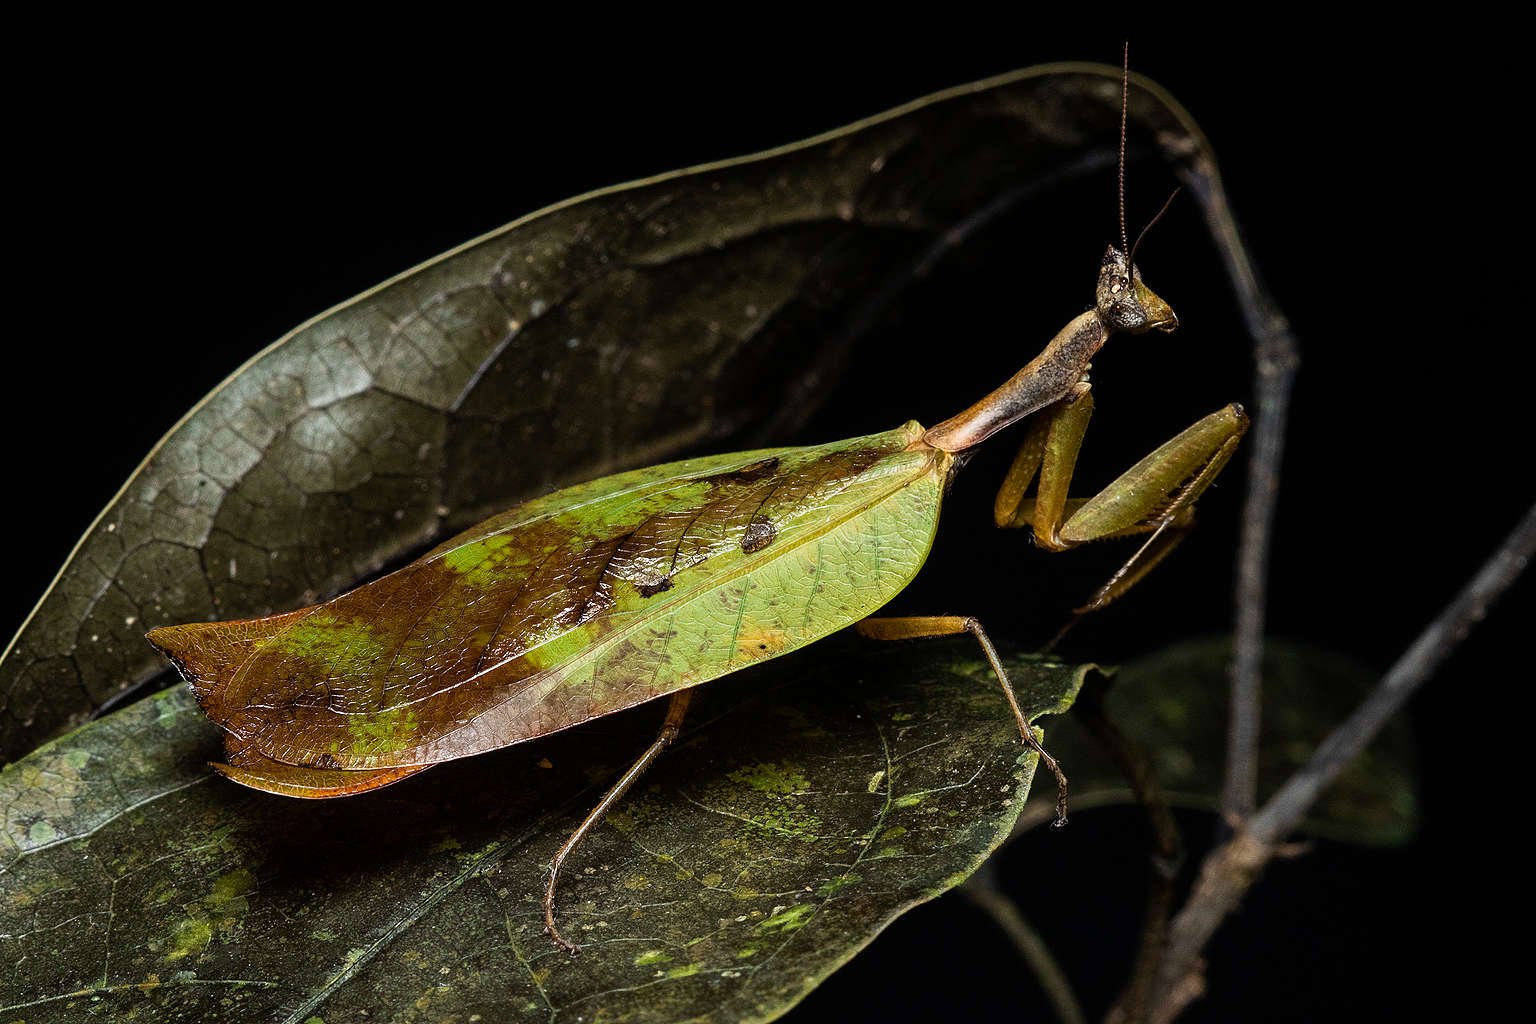 Metilia屬的亞馬遜螳螂，有著與葉子相似的巨大翅膀，這種螳螂難以在亞馬遜森林以外的地方生存。© Projeto Mantis